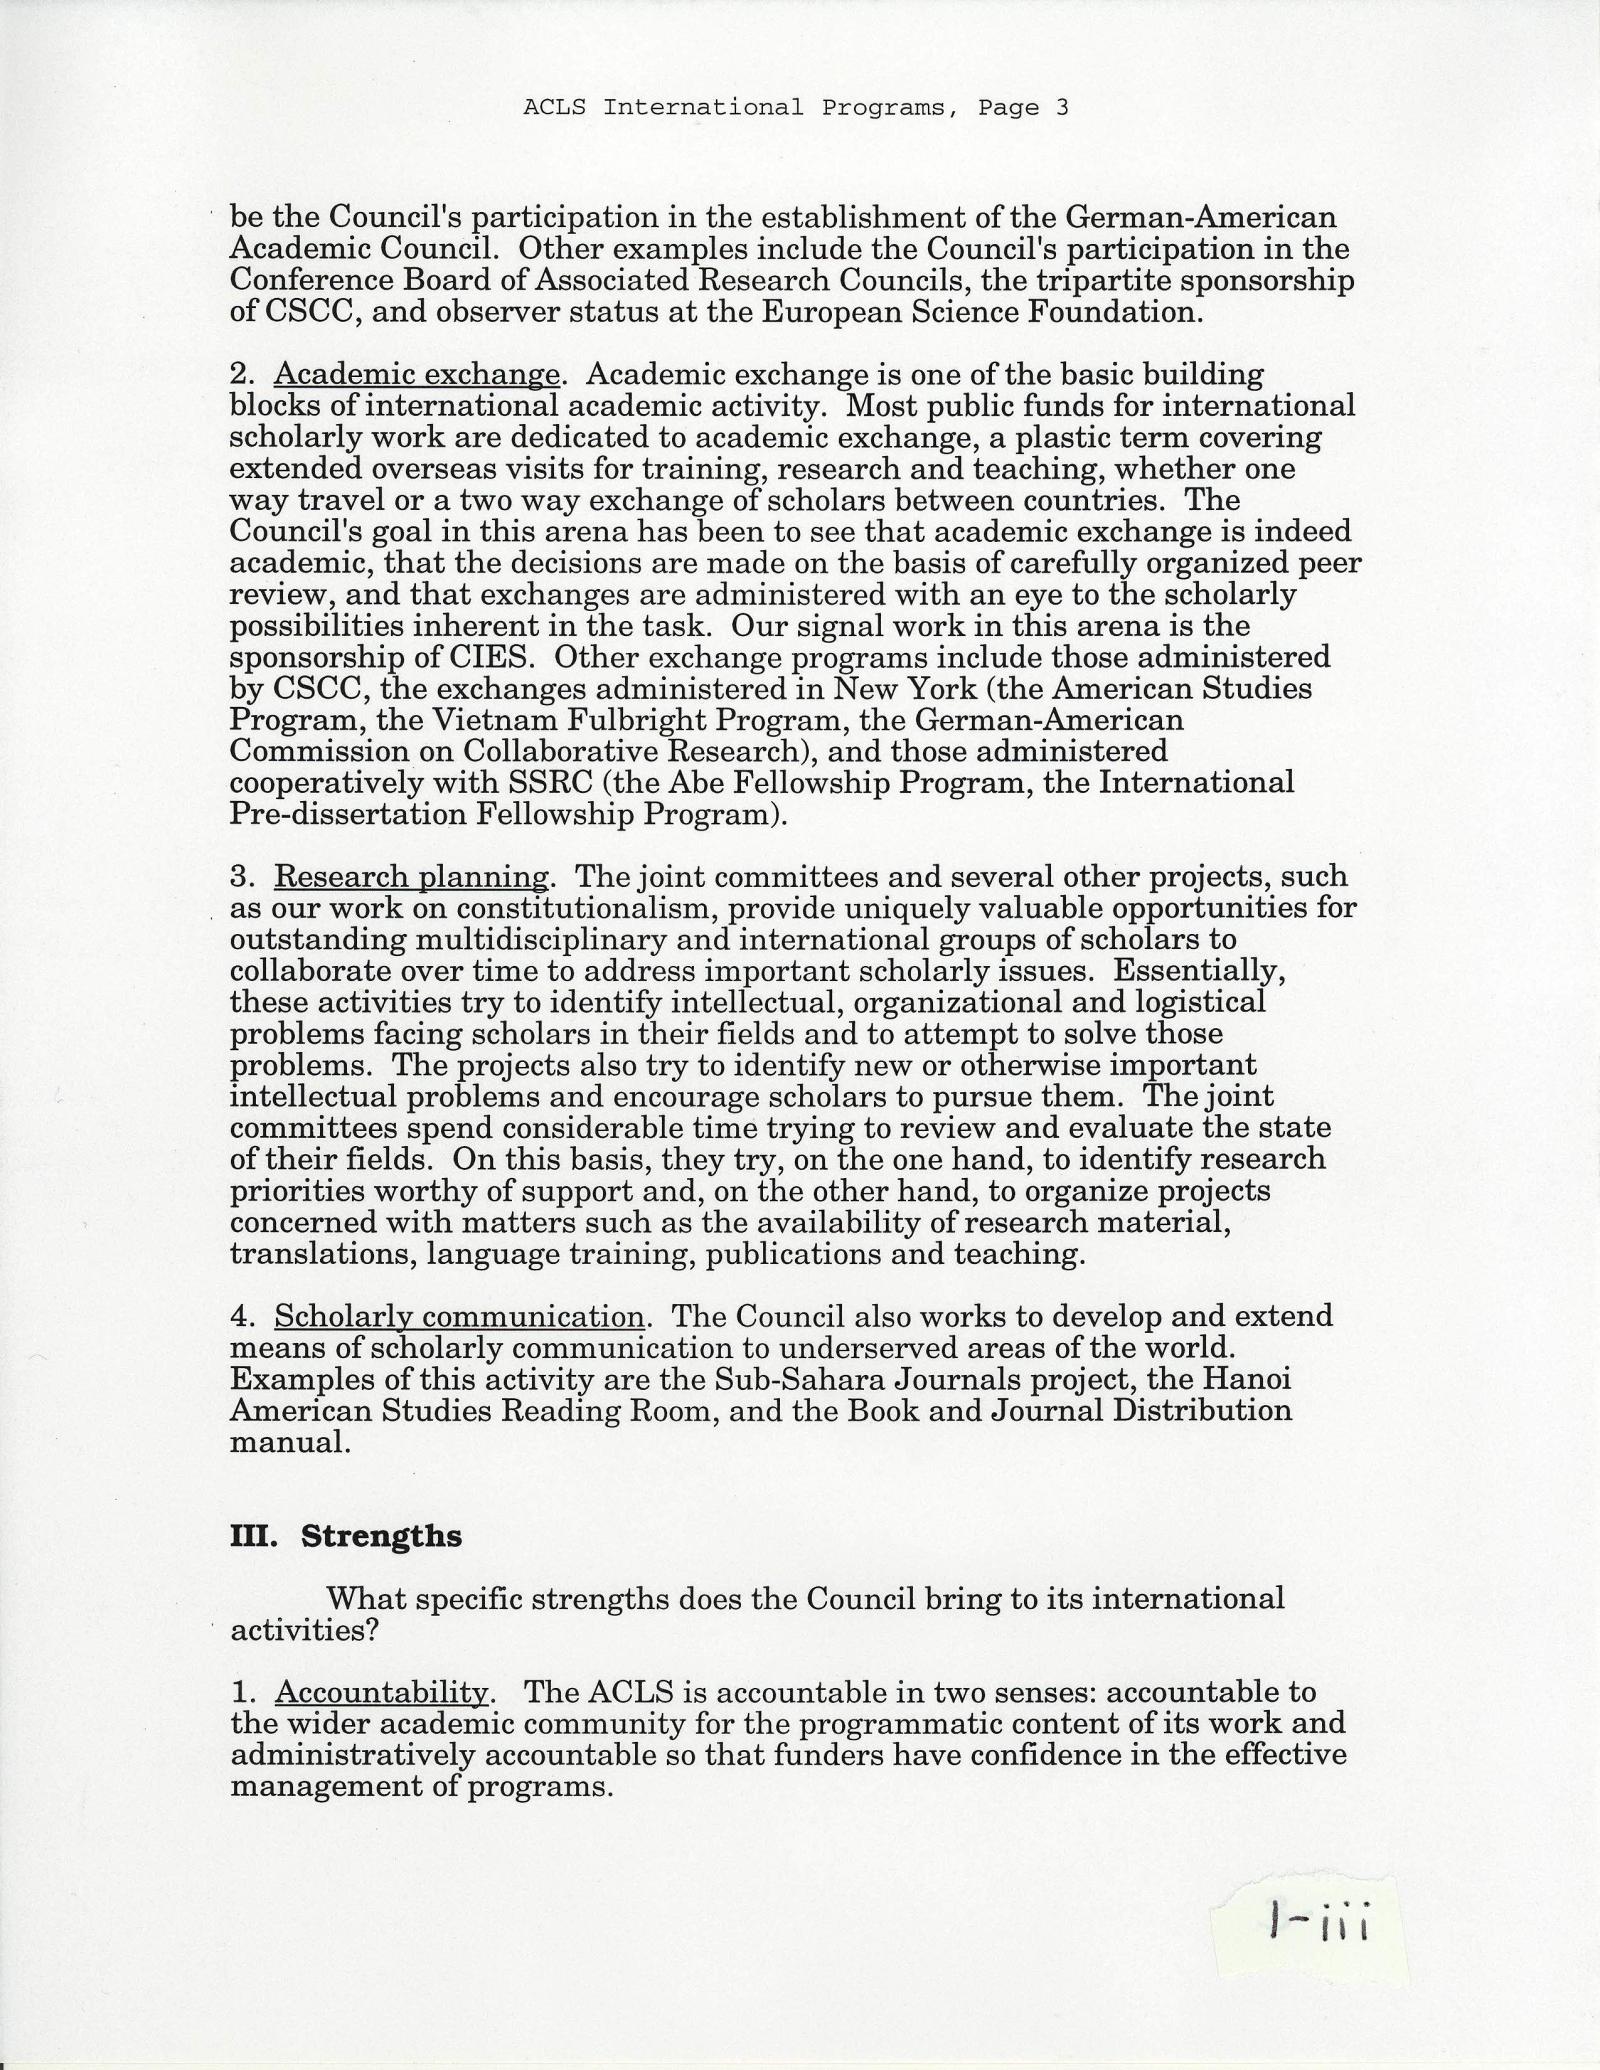 International Programs, page 3